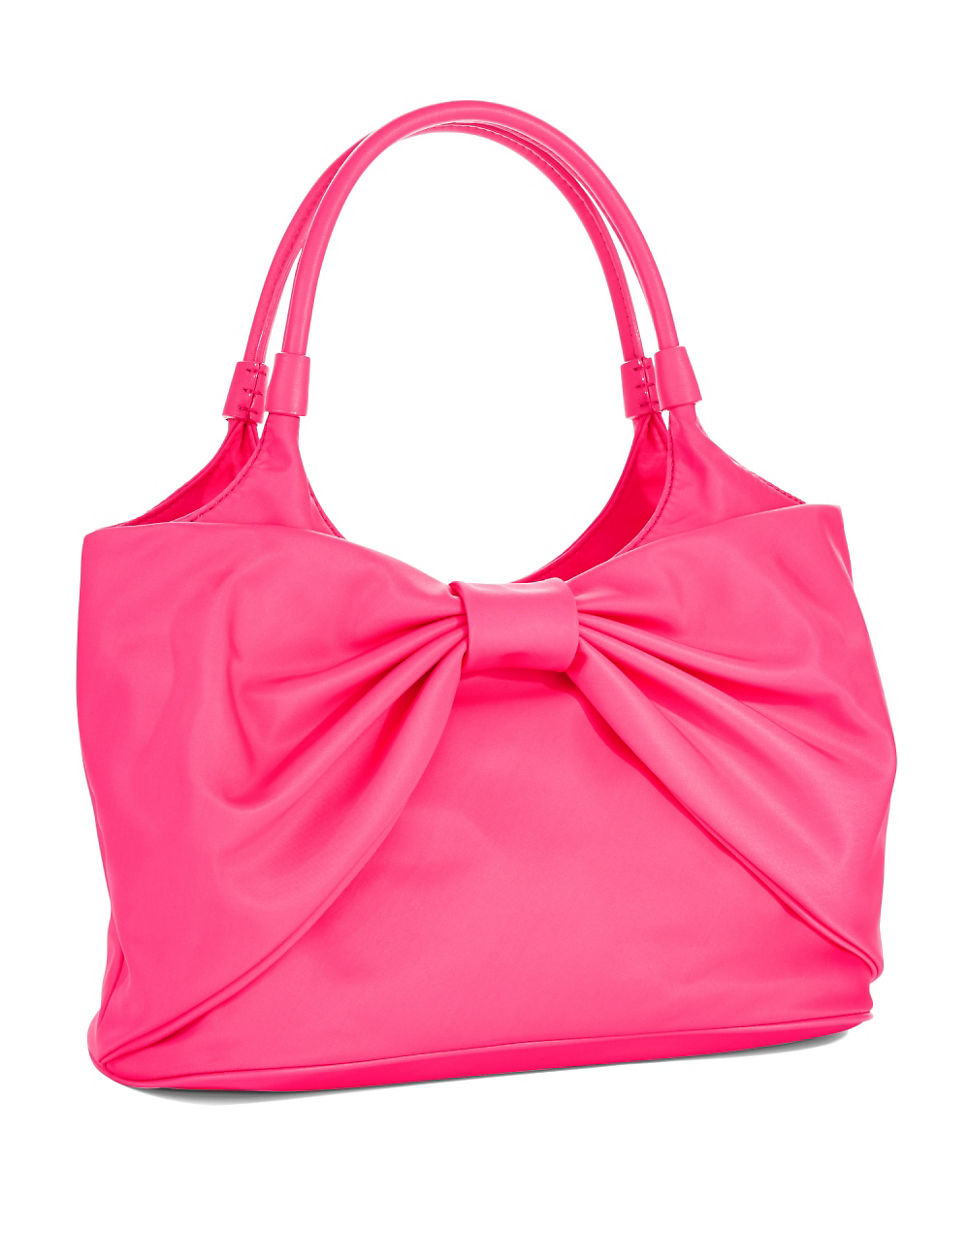 Lyst - Kate Spade New York Sutton Handbag in Pink